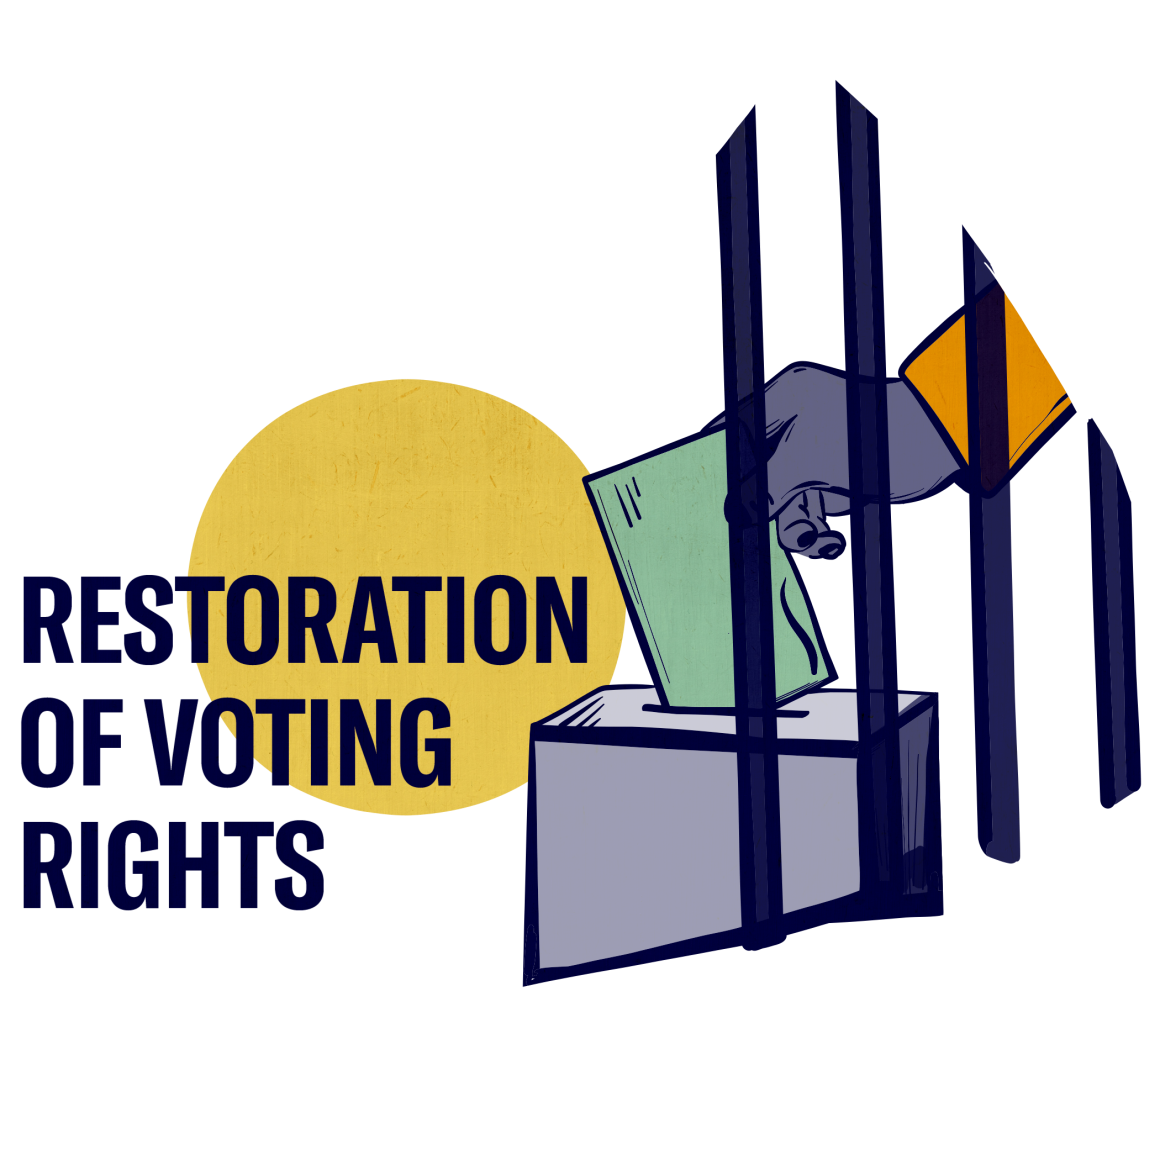 Restoration of Voting Rights